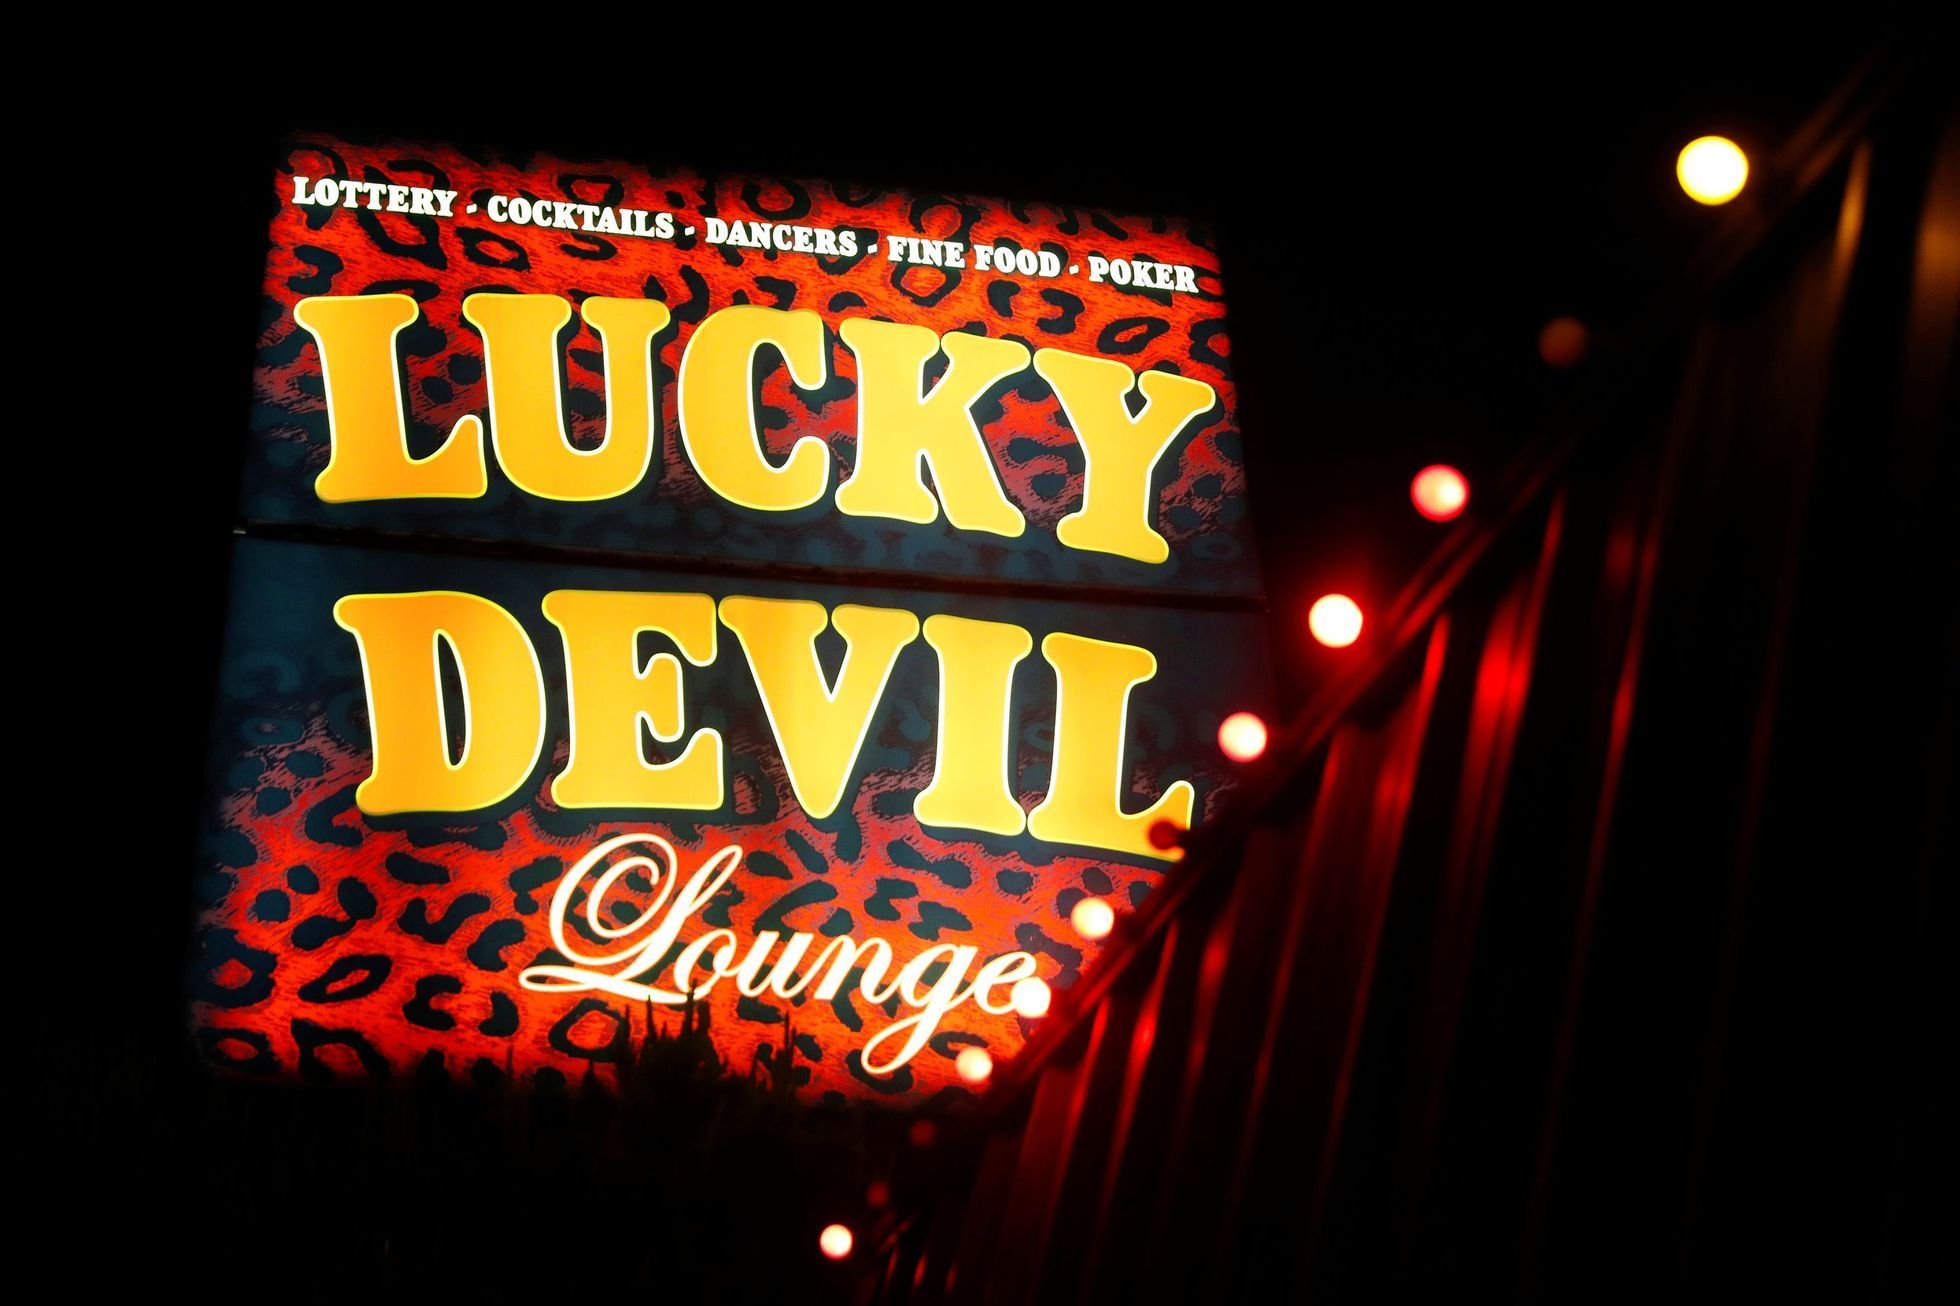 Lucky Devil Lounge strip club